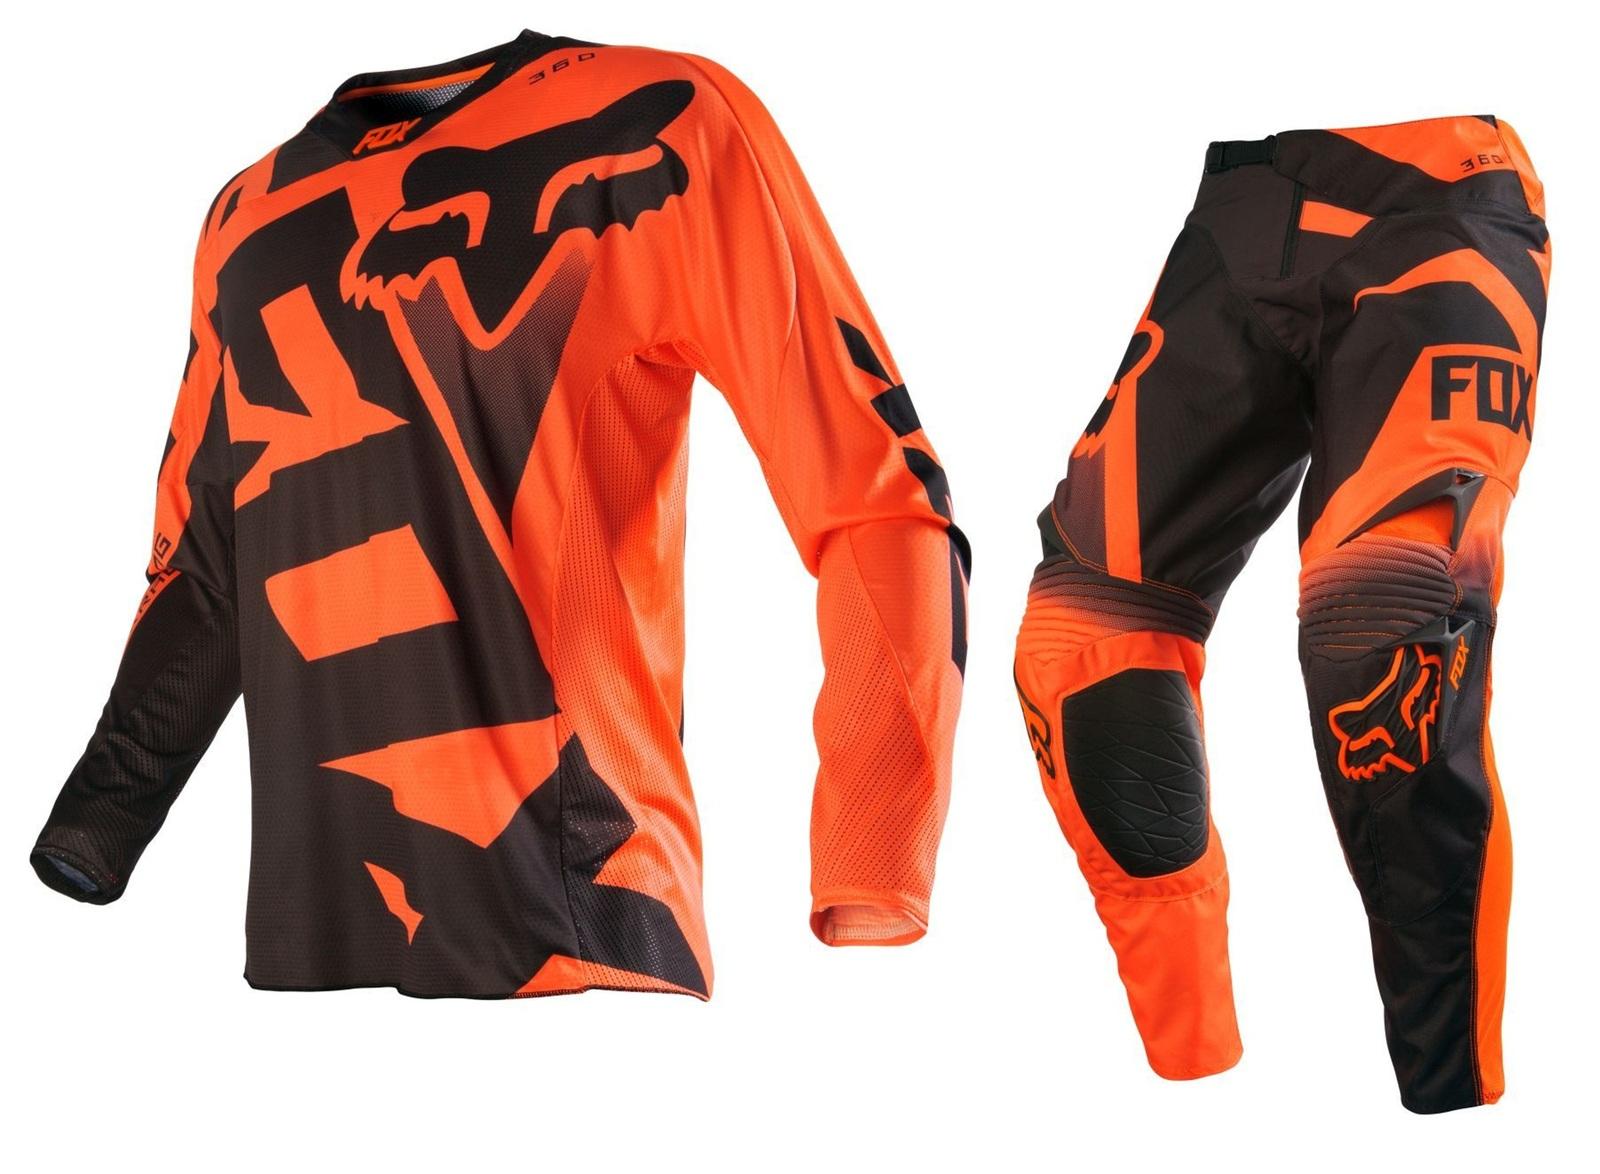 Fox Racing NEW 2016 Mx 360 Shiv Orange Black KTM Motocross Dirt Bike Gear Set  eBay